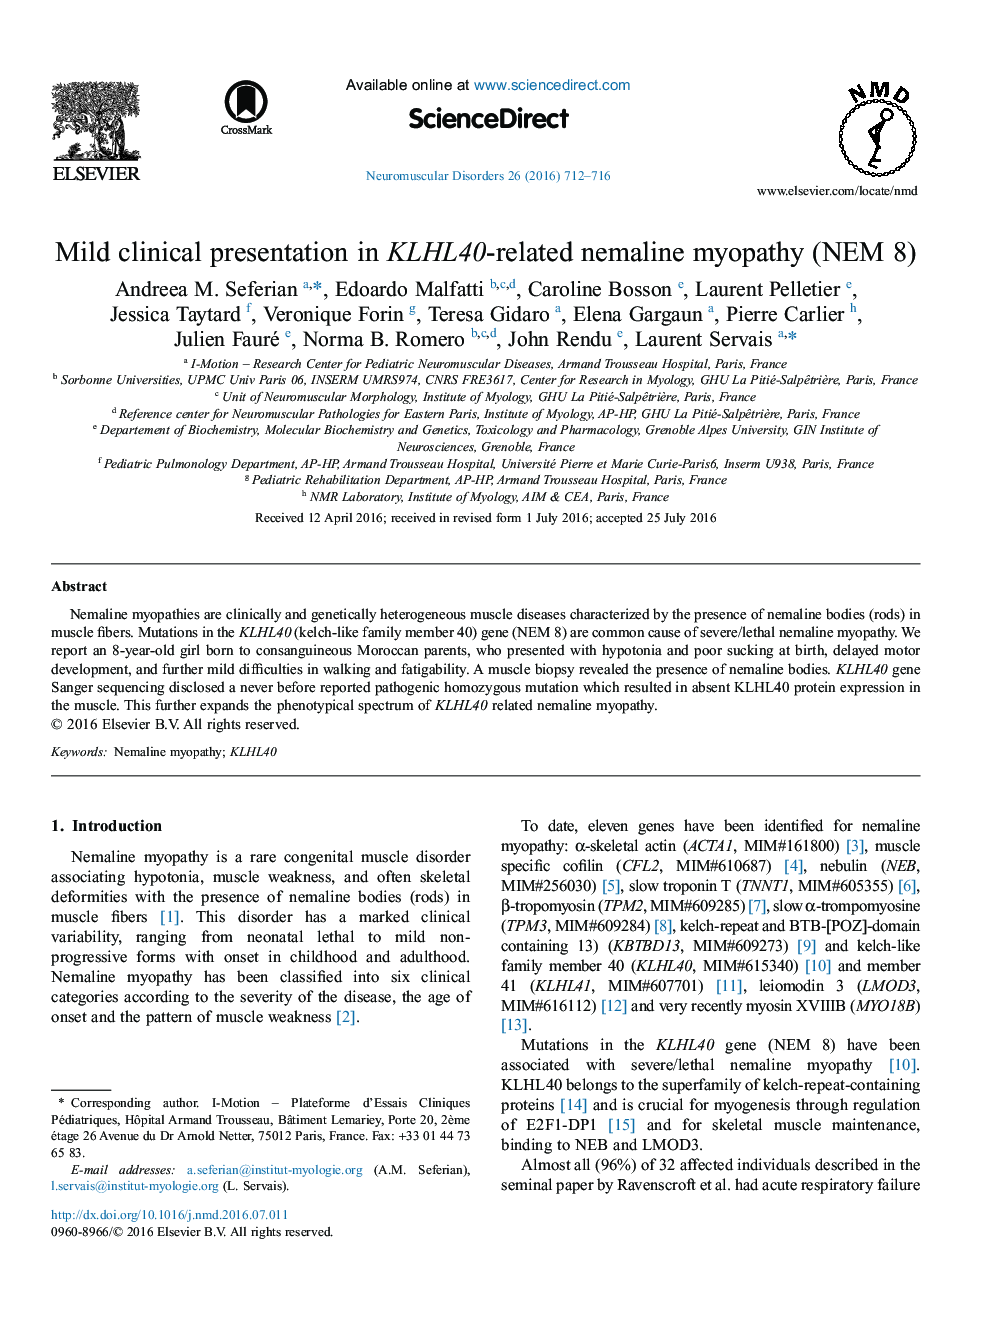 Mild clinical presentation in KLHL40-related nemaline myopathy (NEM 8)